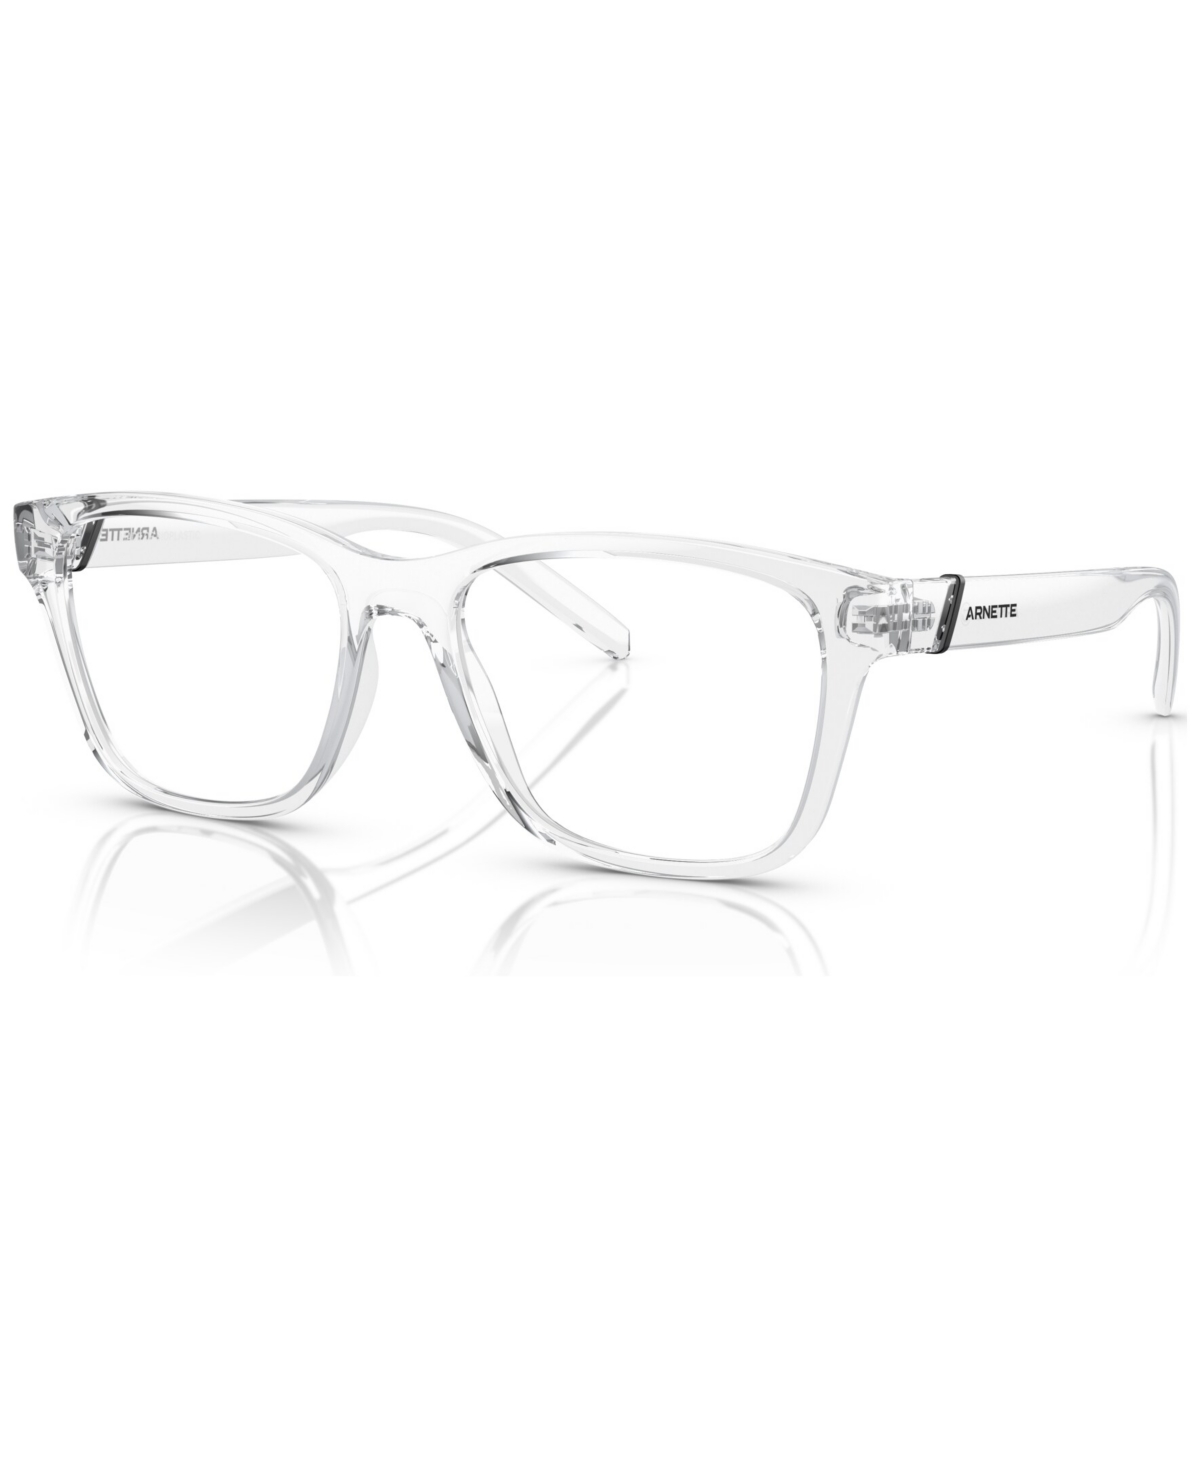 Men's Square Eyeglasses, AN7229 55 - Crystal